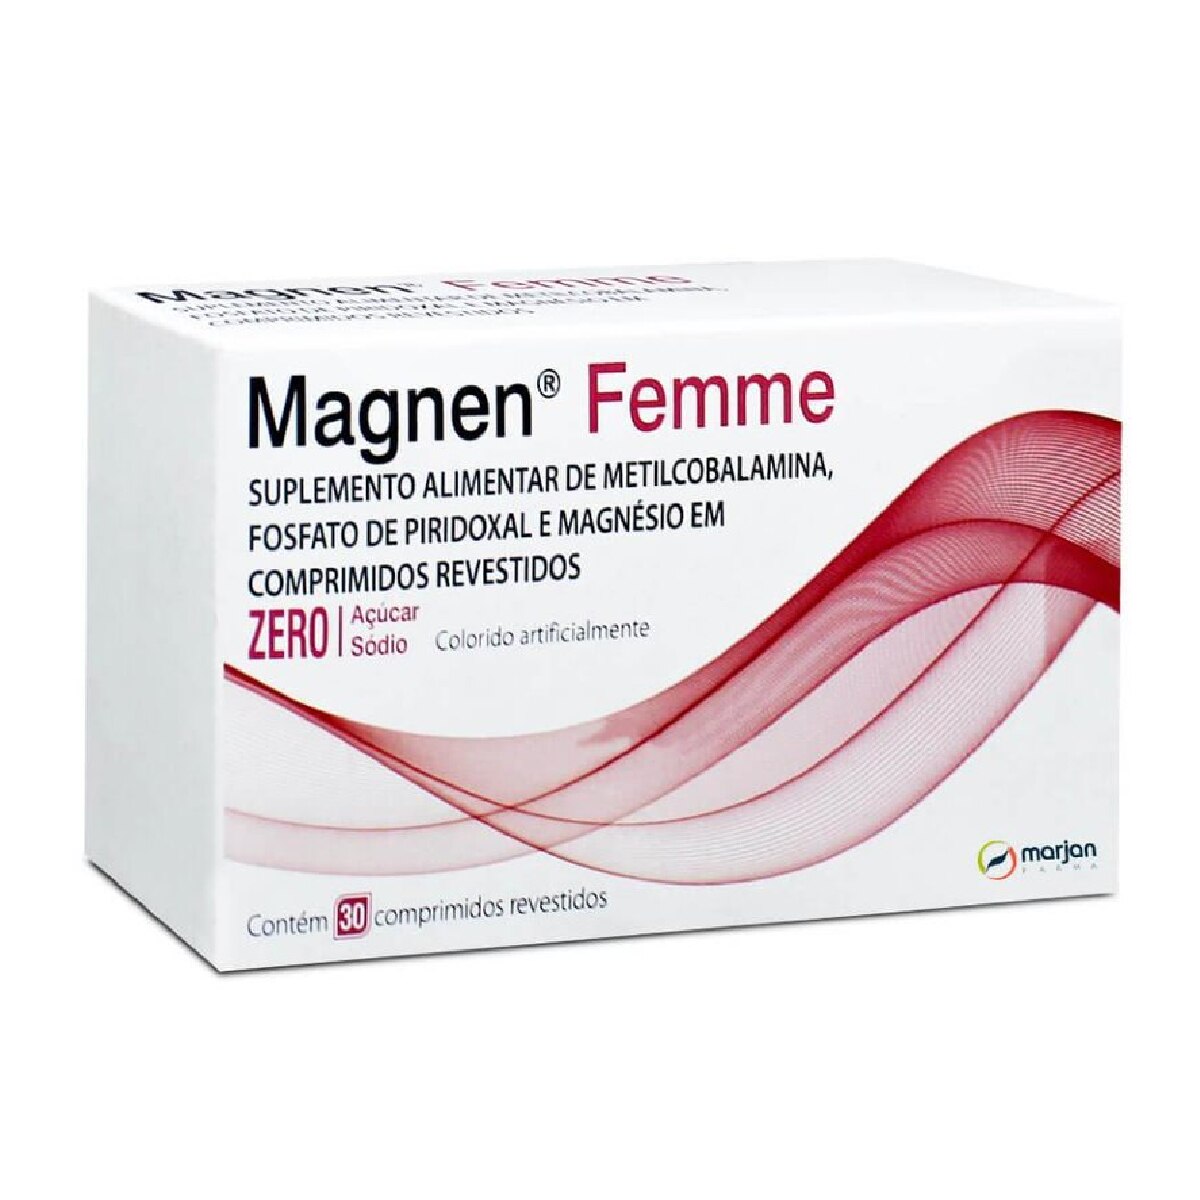 Magnen Femme 30 Comprimidos Revestidos